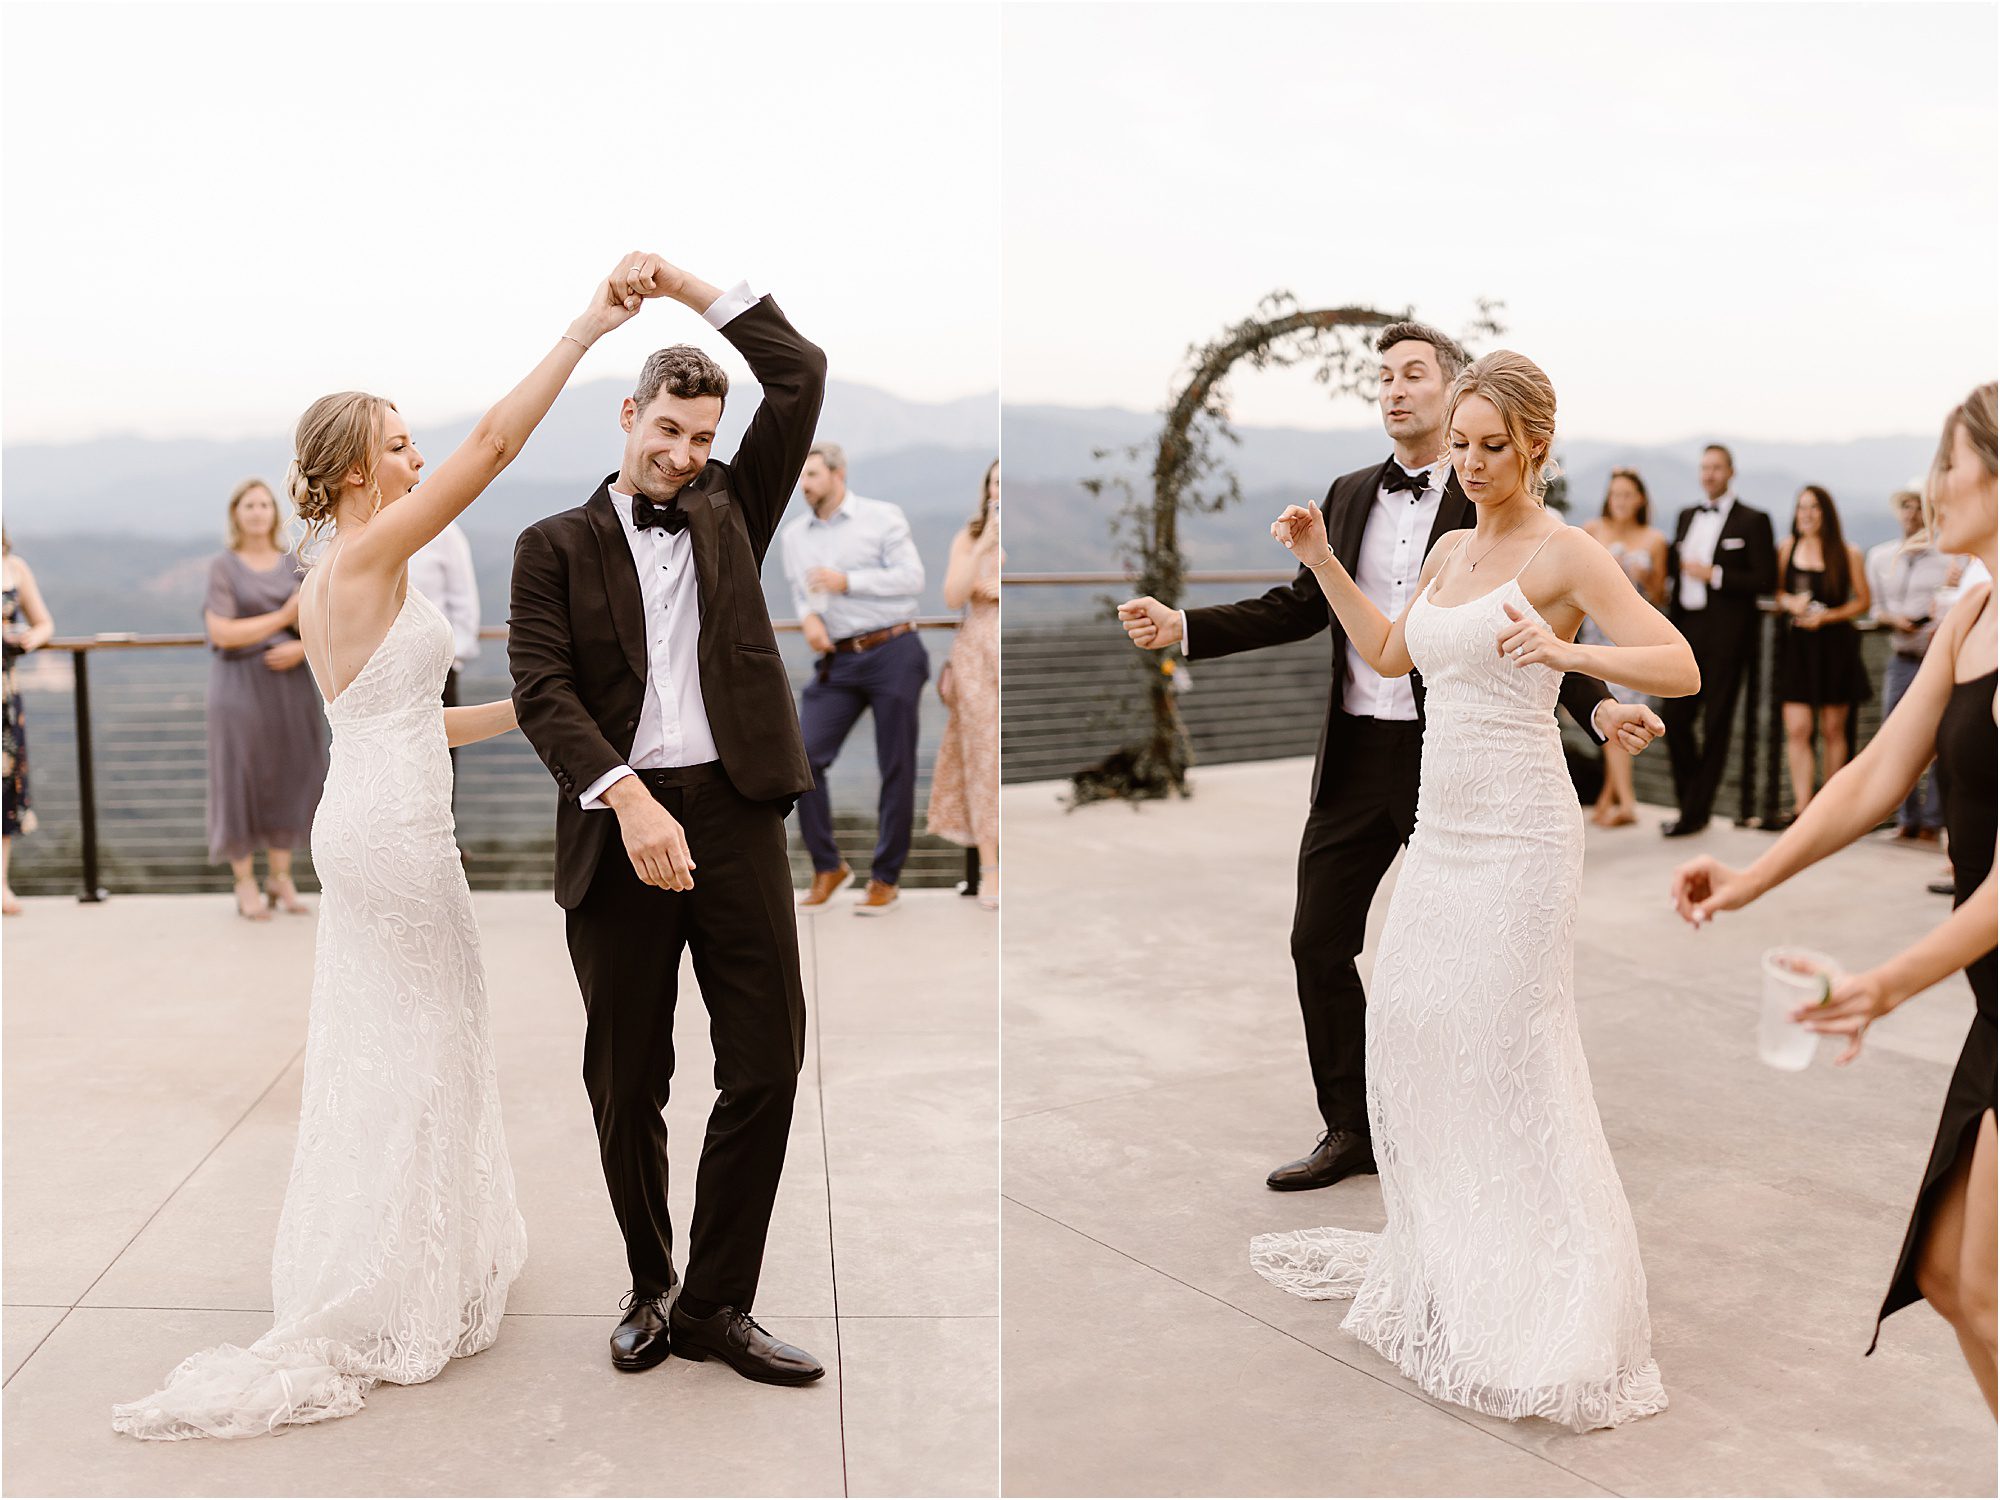 first dance photos at wedding reception overlooking the Smokies